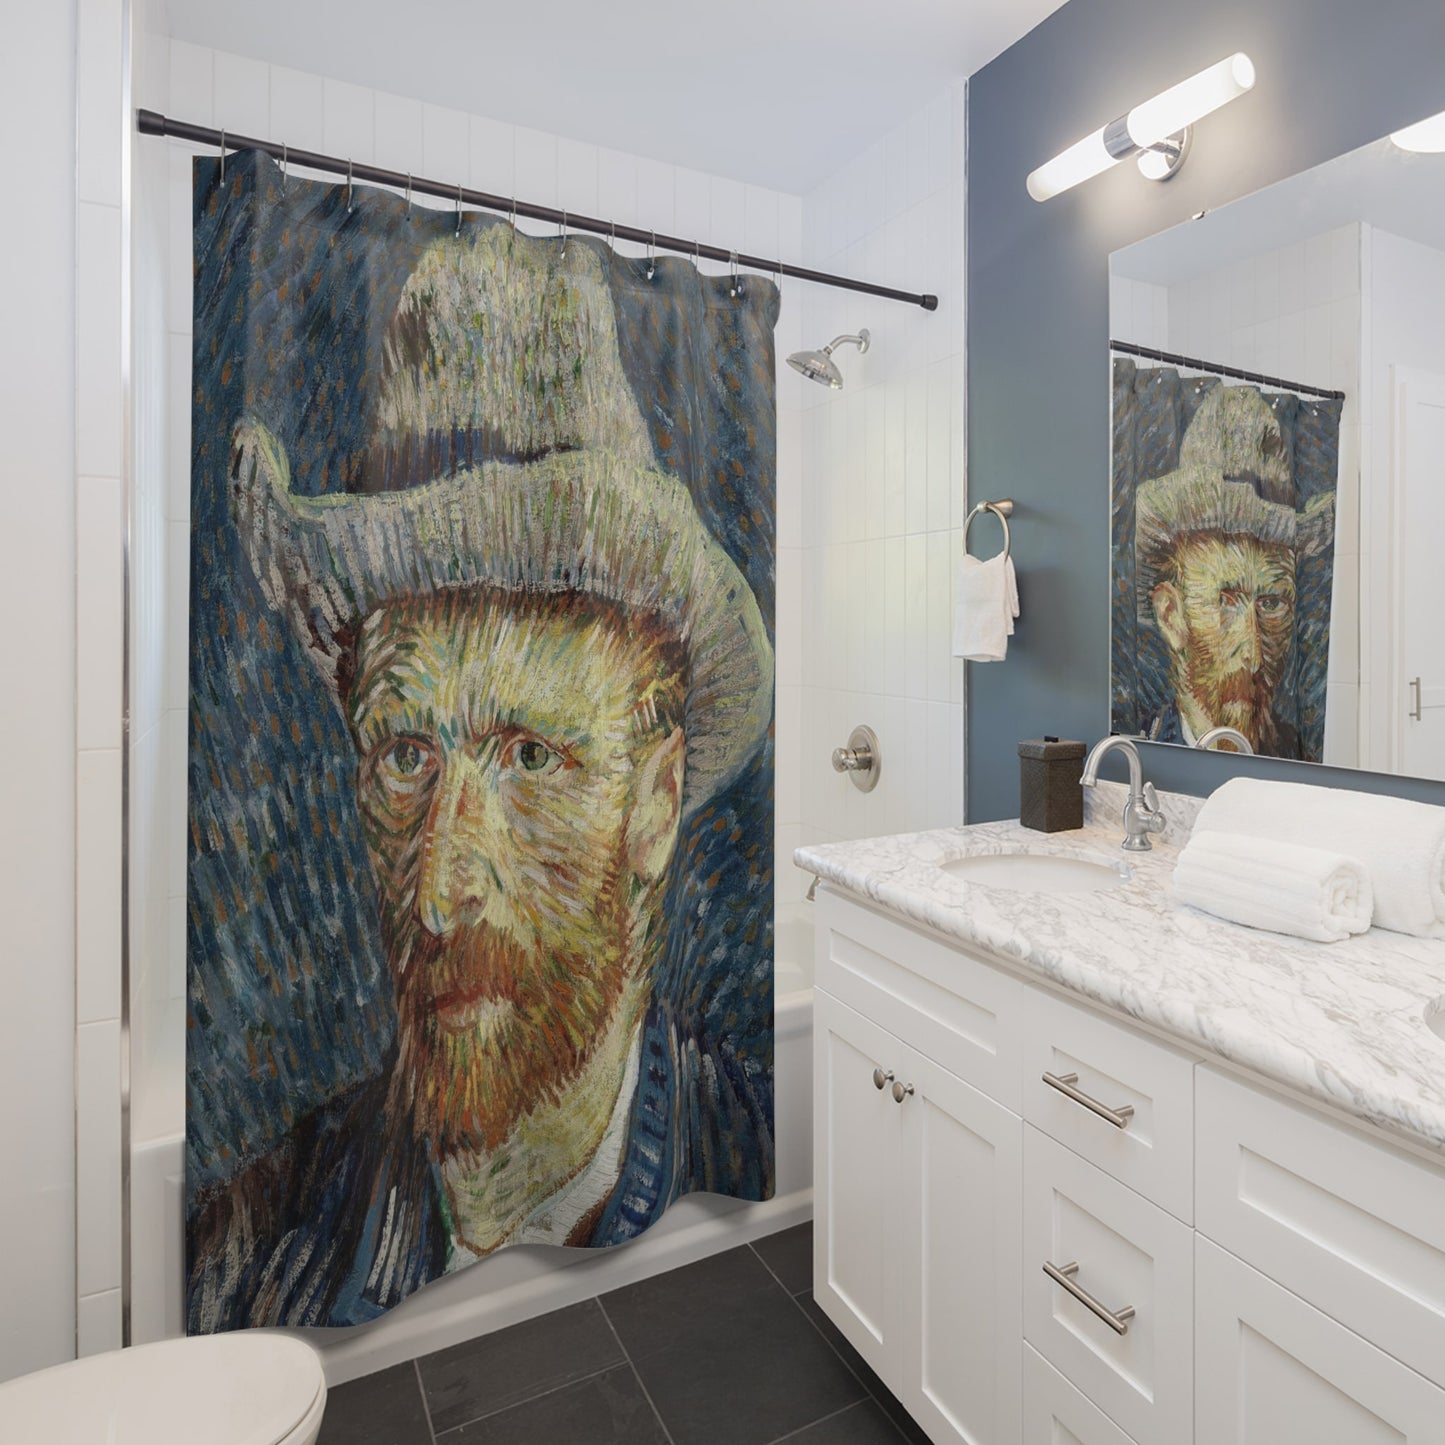 Cool van Gogh Shower Curtain Best Bathroom Decorating Ideas for Humor and Fun Decor